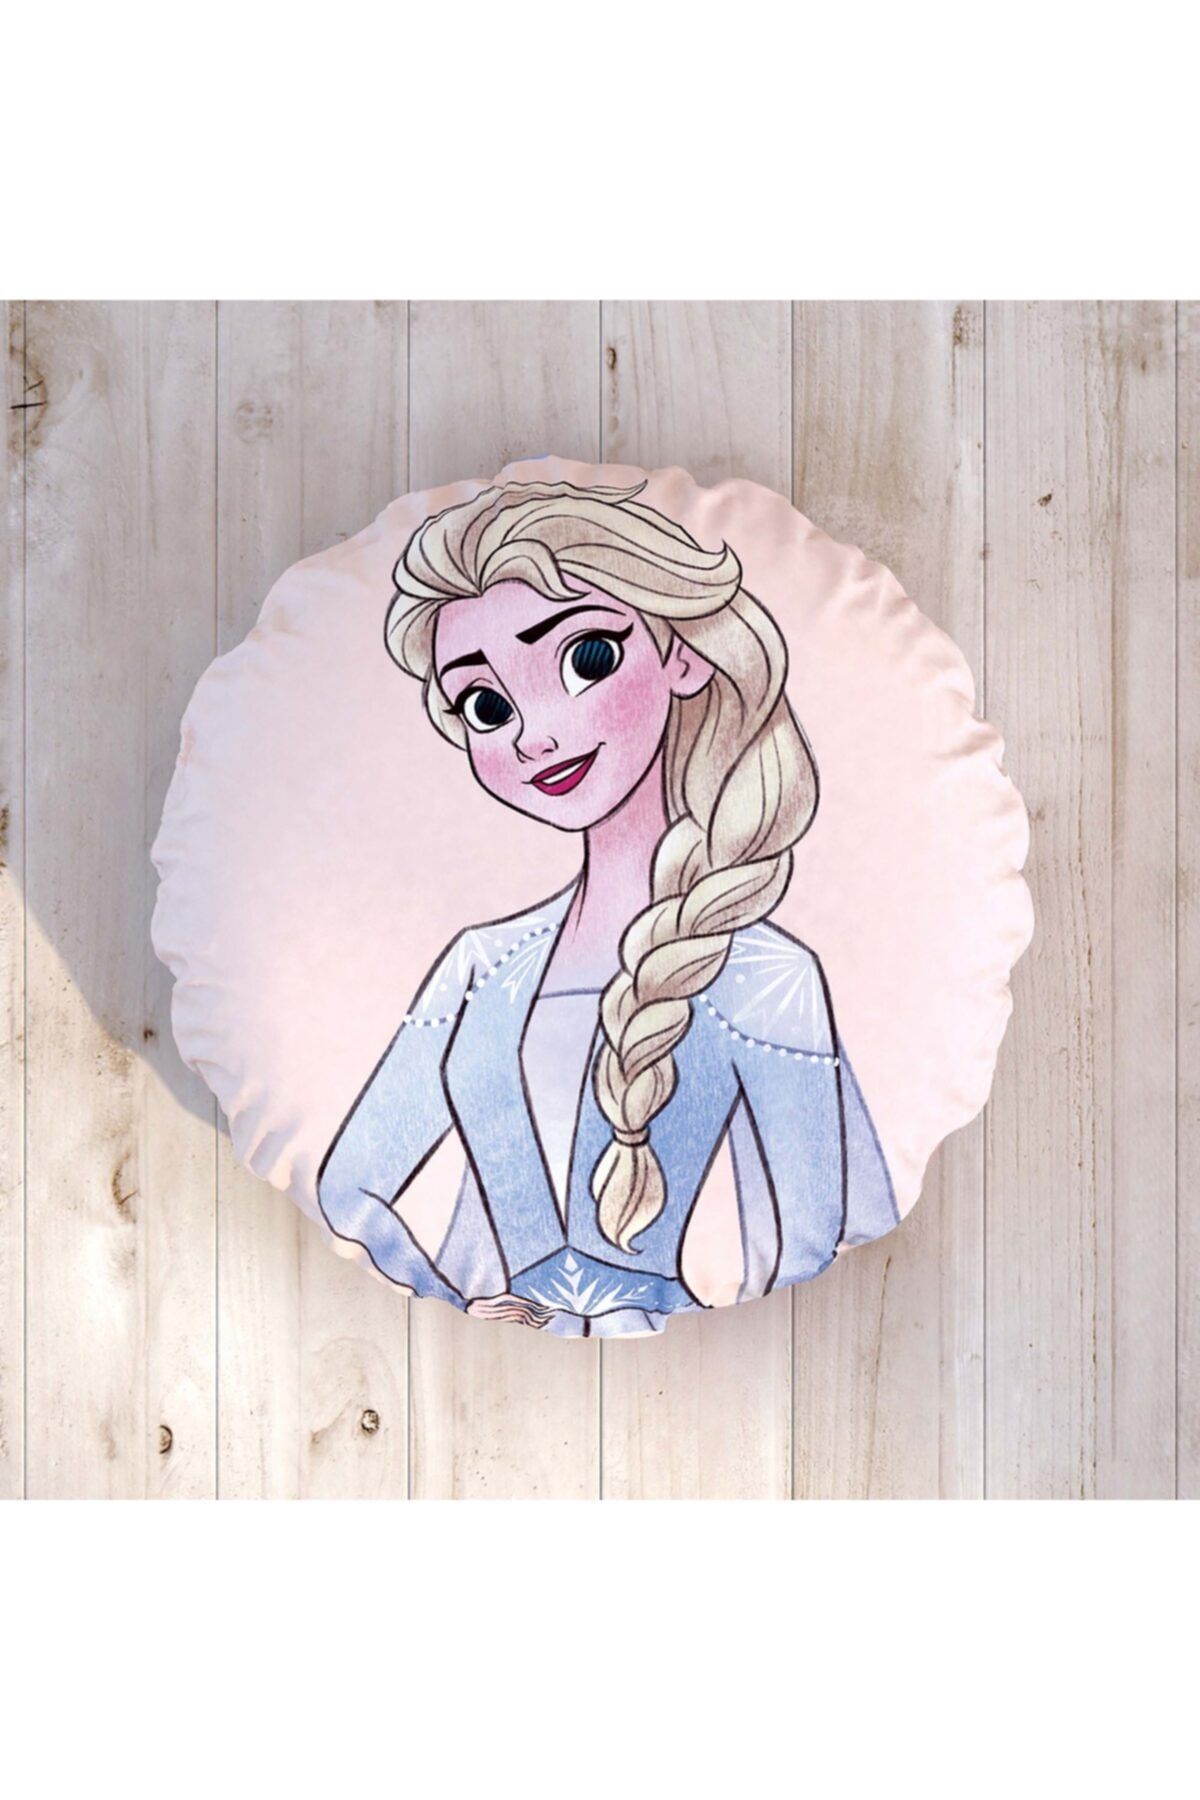 Taç Disney Frozen 2 Elsa&anna 40x40 Kırlent Renkli/baskılı